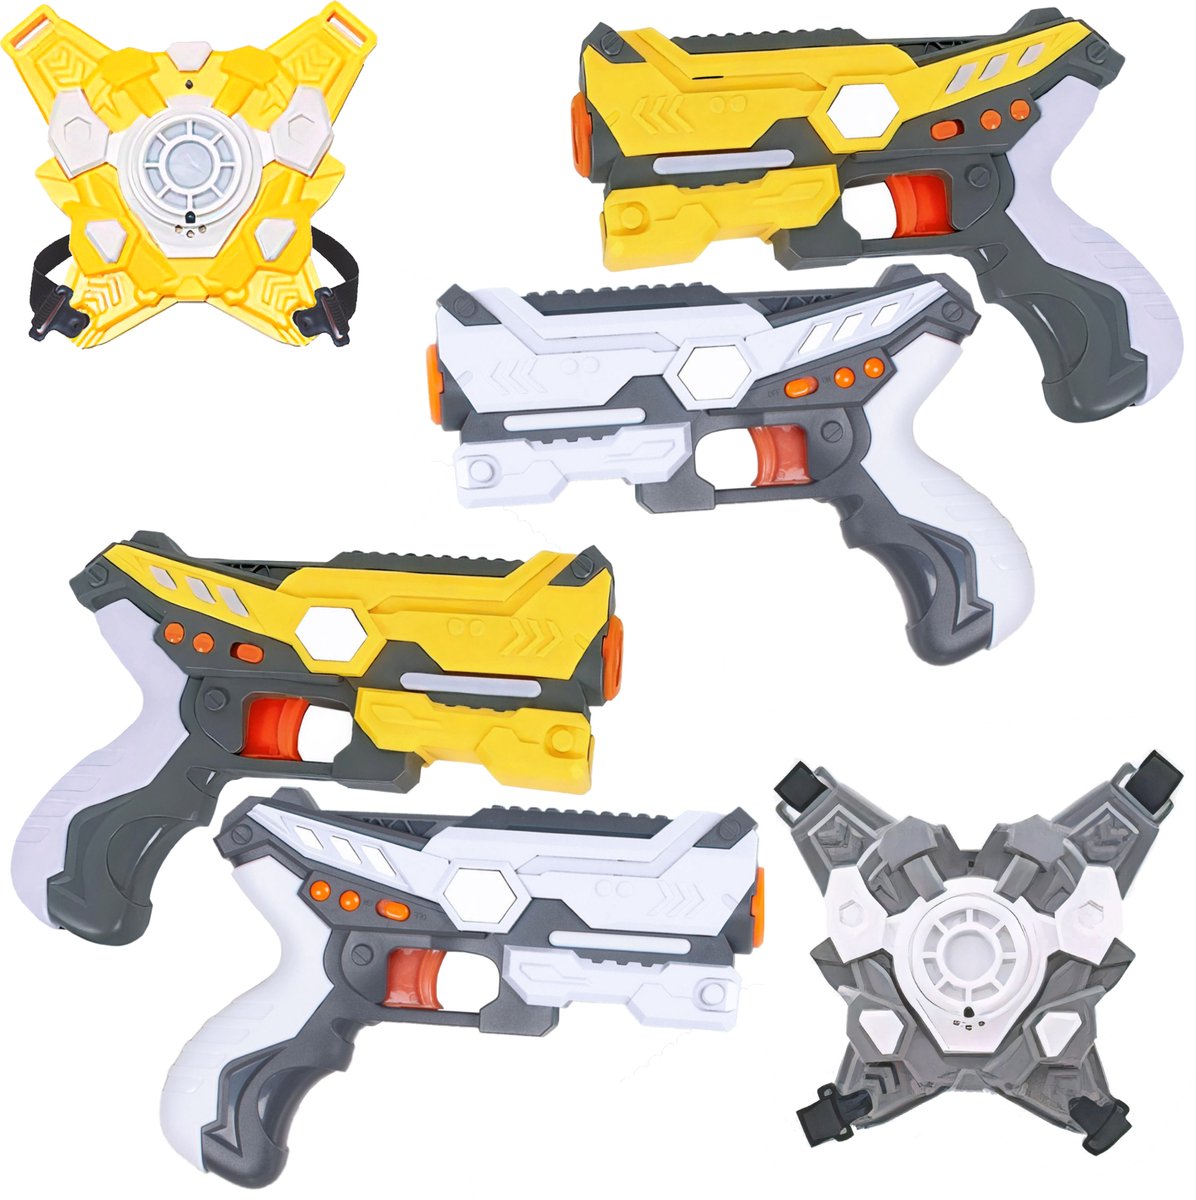 StarWarrior Lasergame set - Kleur Wit / Geel - Lasergame set voor kinderen - Lasergame pistolen- 4 Stuks